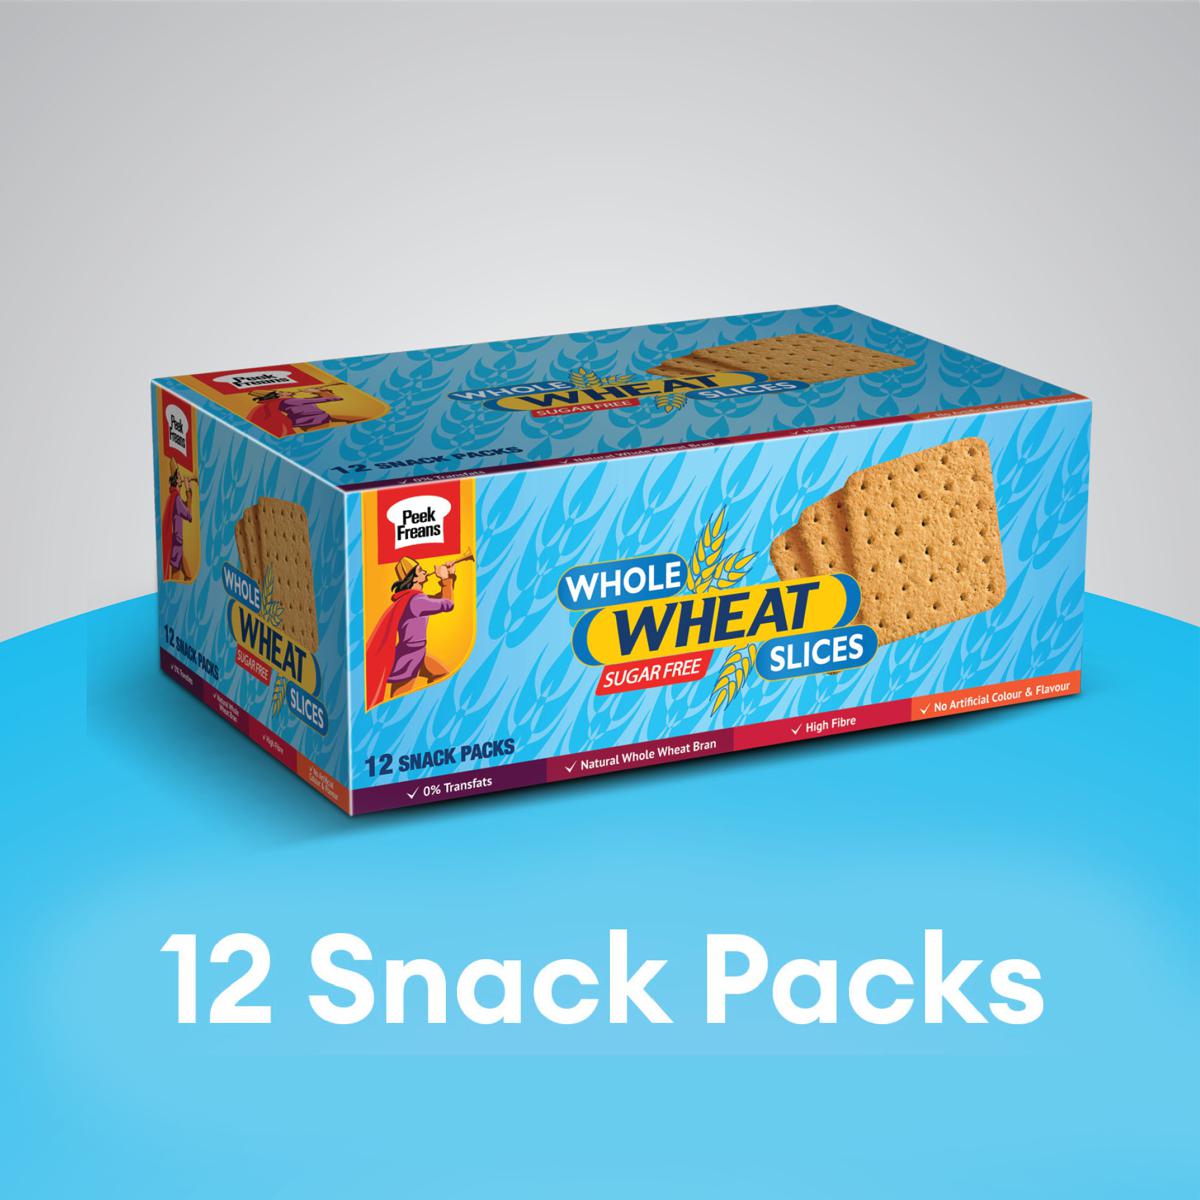 WHOLE WHEAT (SUGARFREE) - Snack Pack